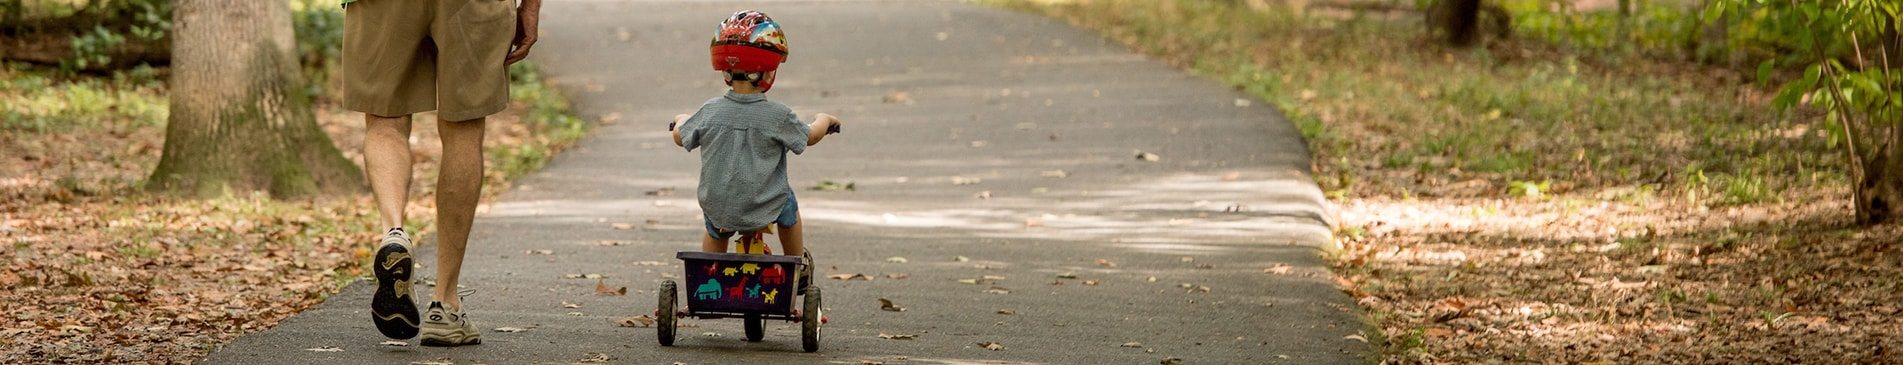 kid riding tricyle with grandpa arlington county virginia